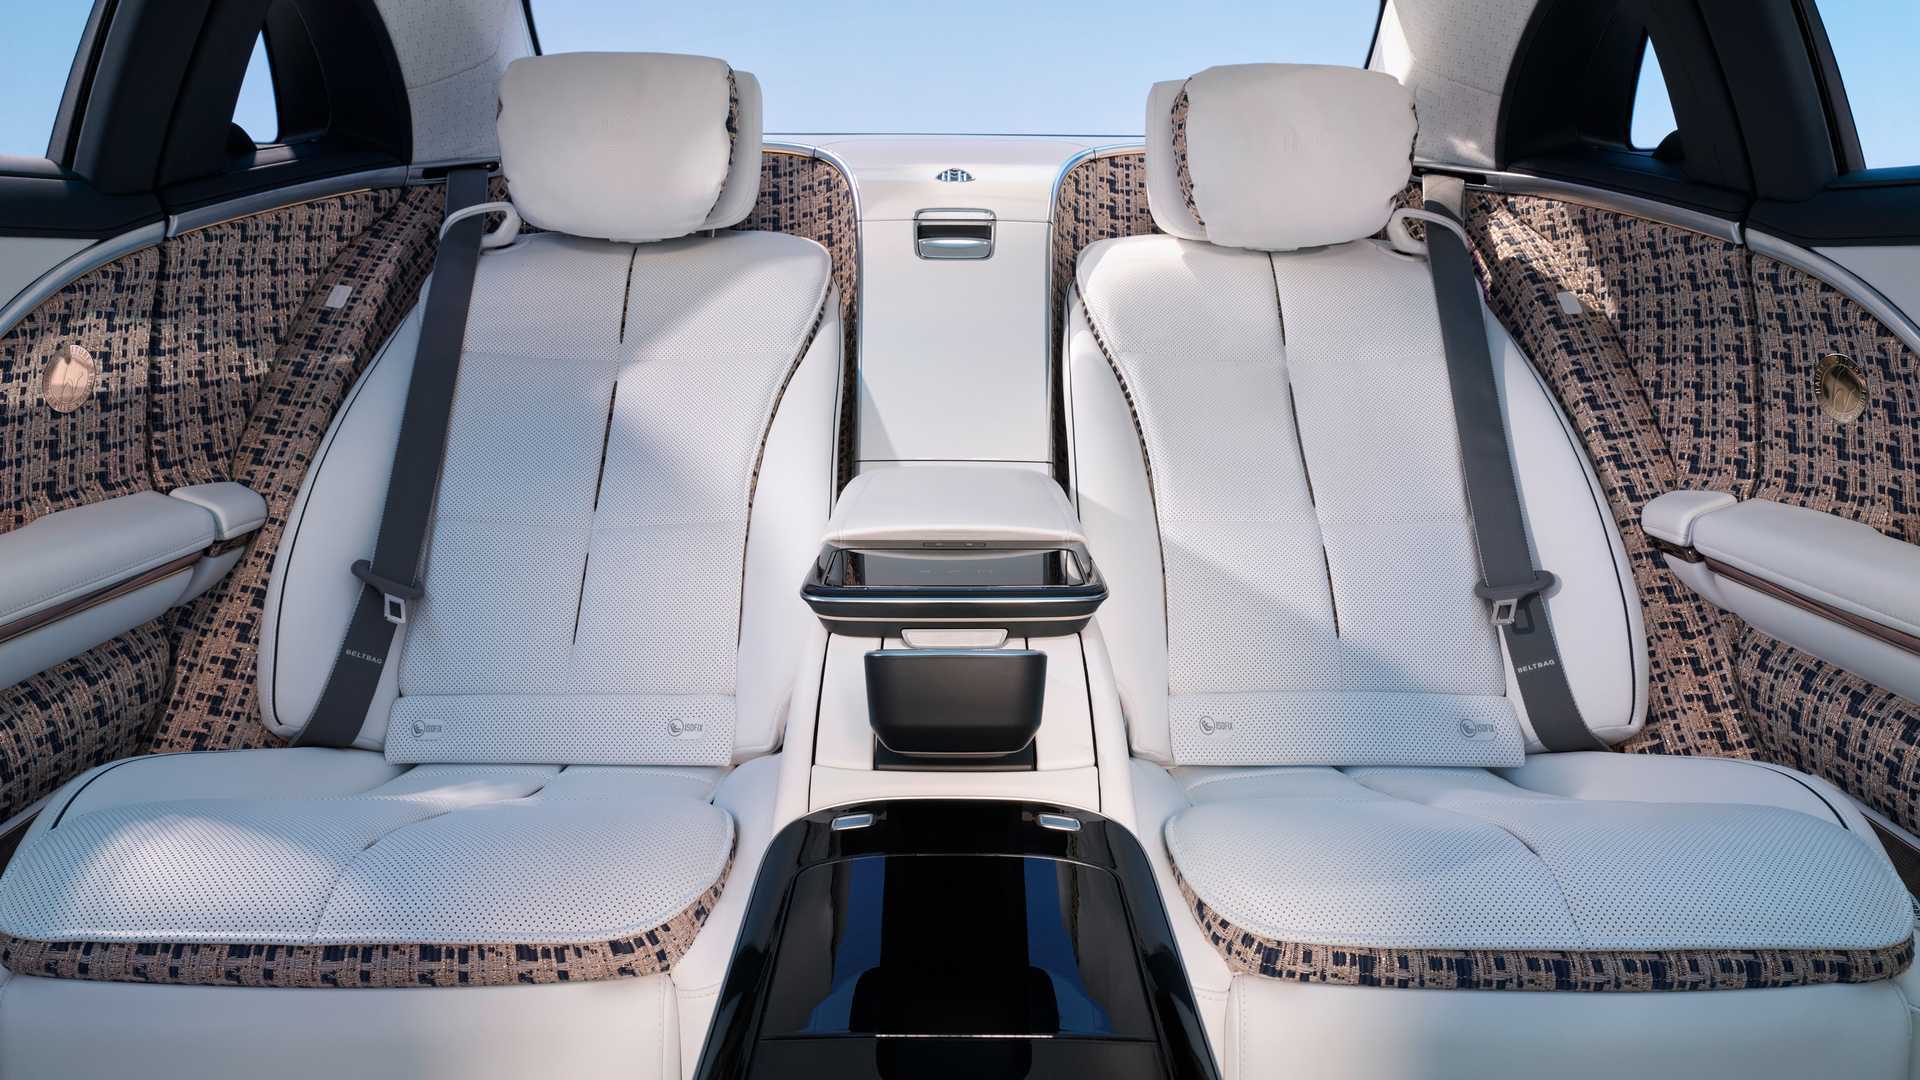 Mercedes-Maybach представили розкішний S-Class Haute Voiture